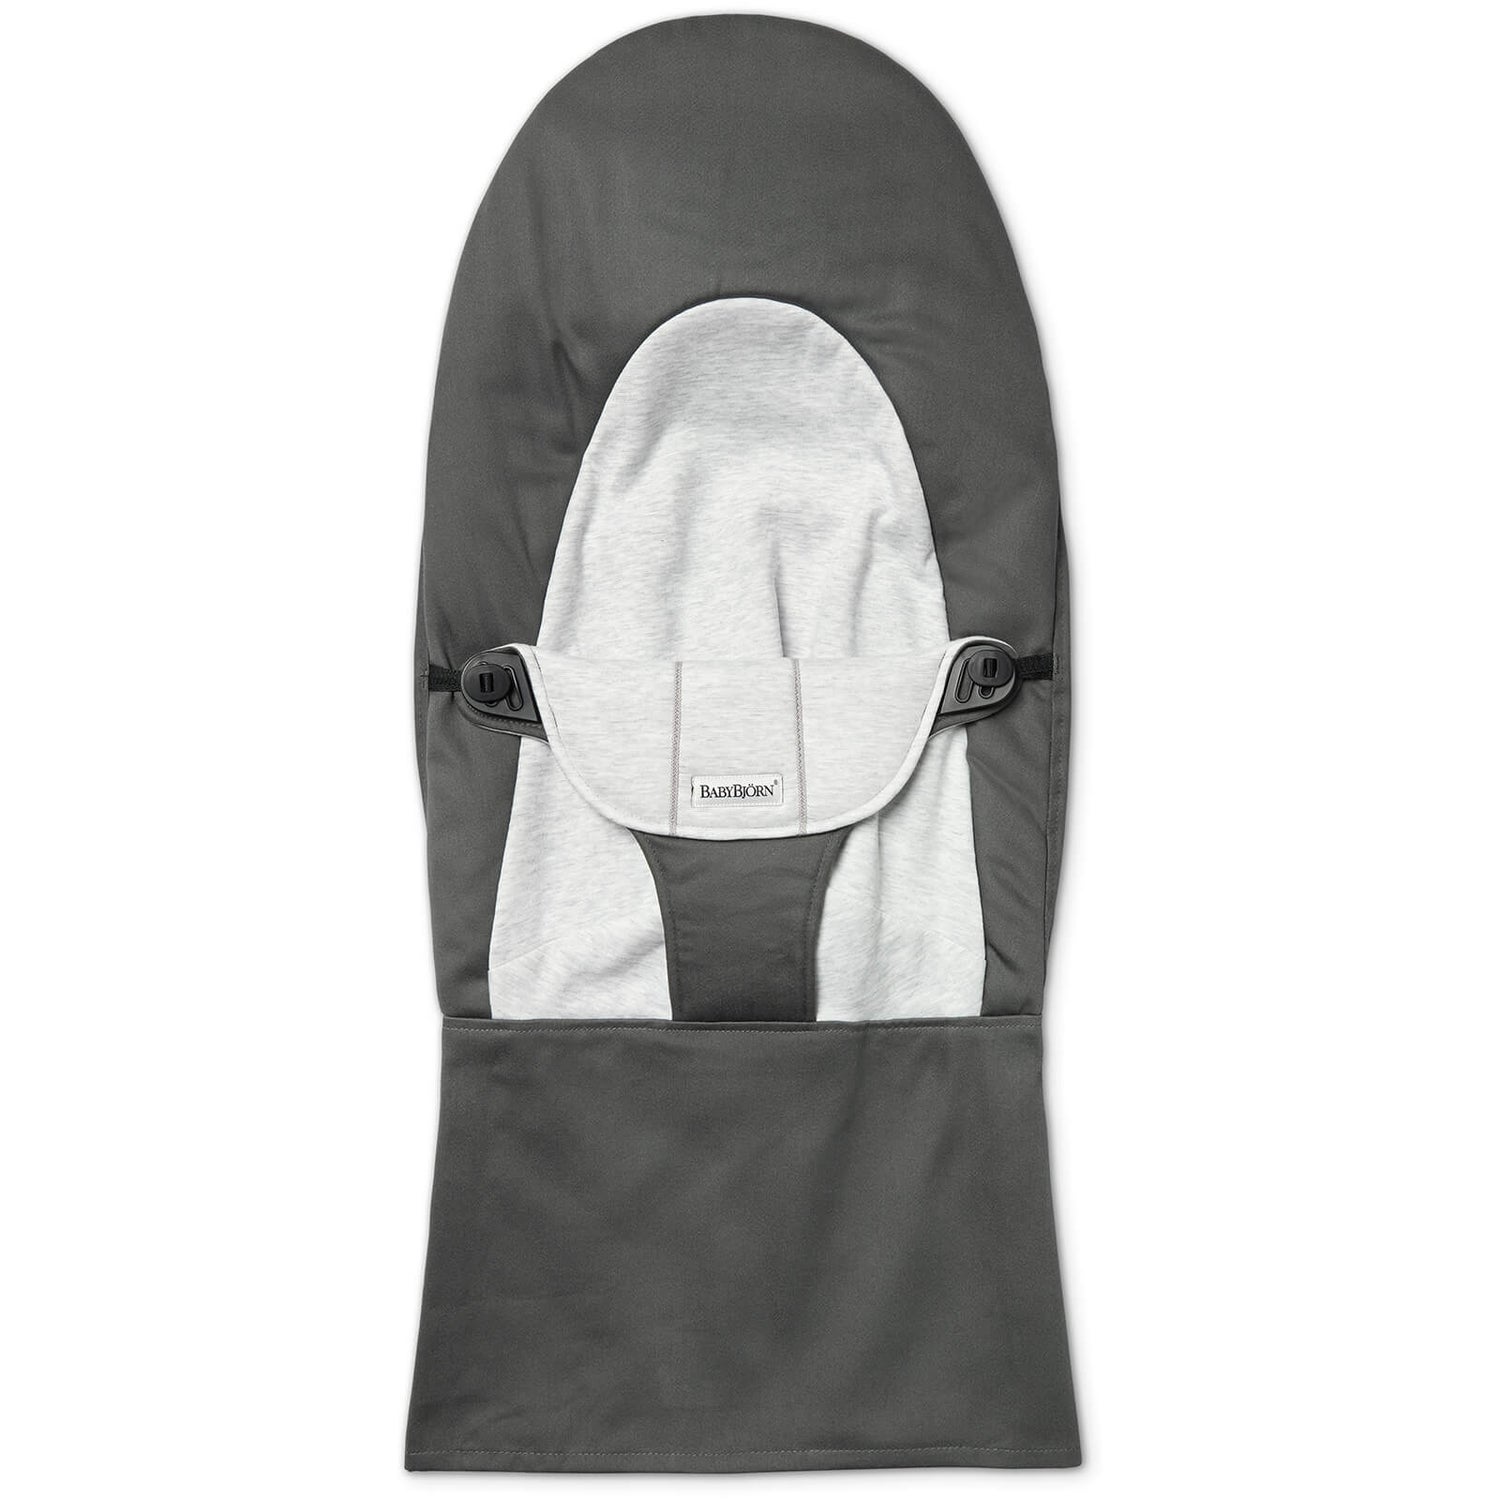 BABYBJÖRN Spare Fabric Seat For Balance Bouncer Soft - Dark Grey Cotton